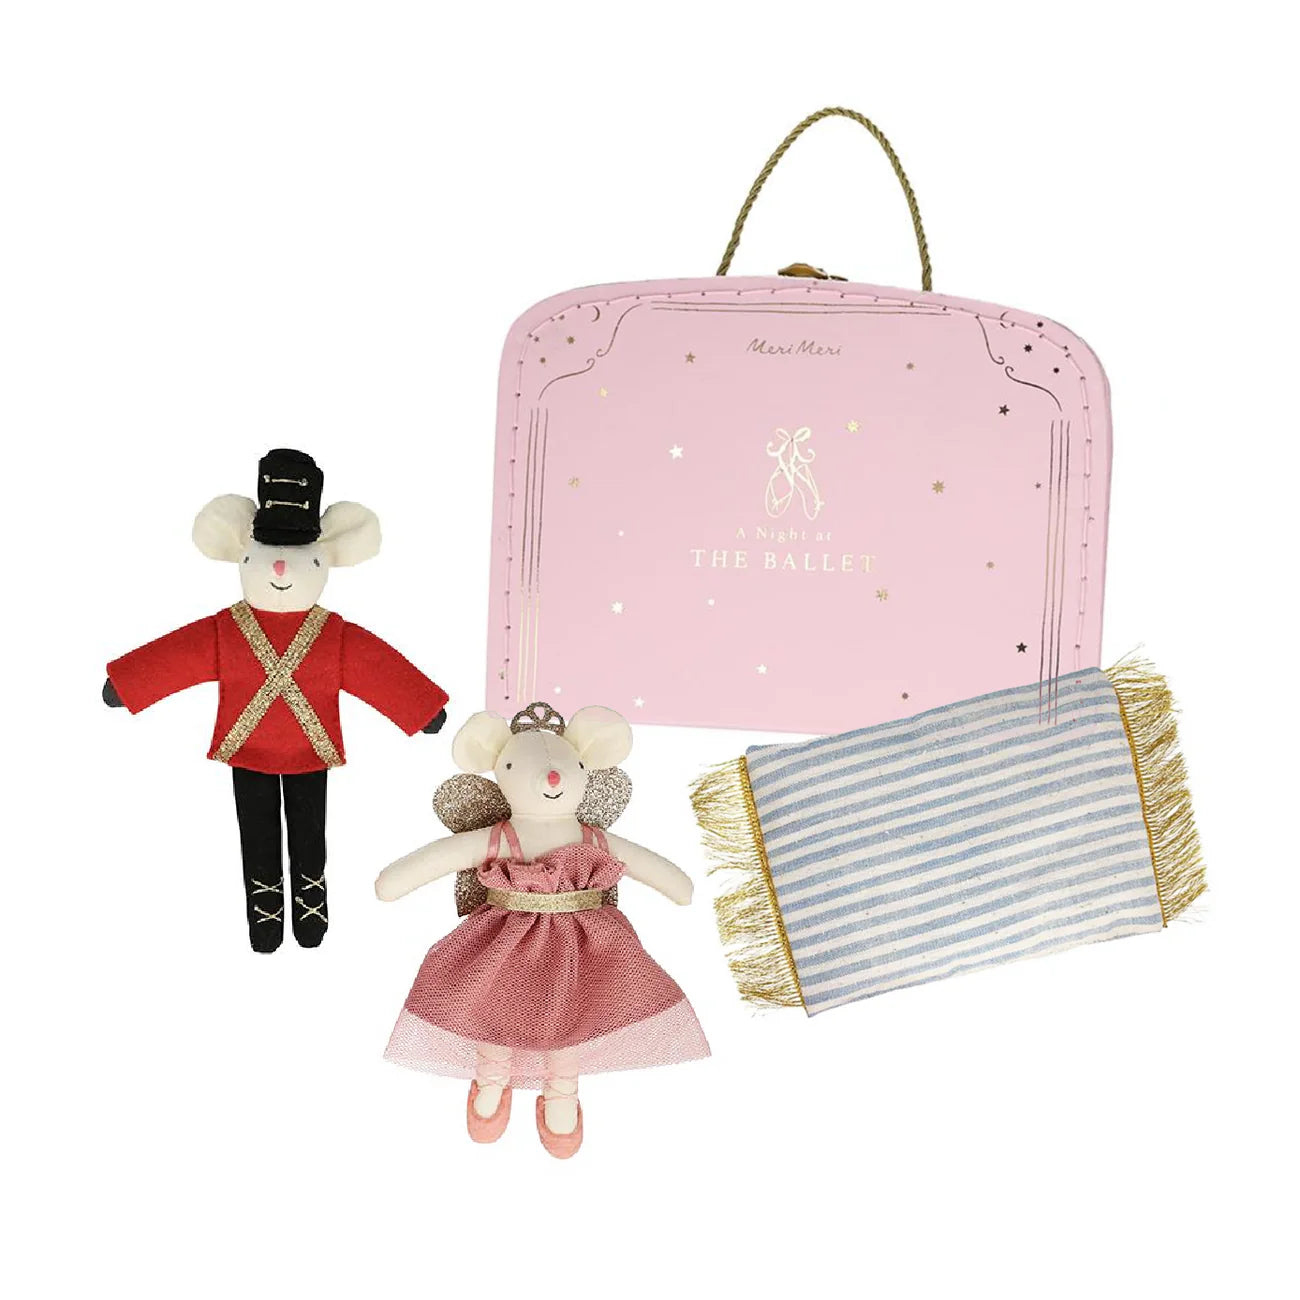 Theatre Suitcase and Ballet Dancer Dolls